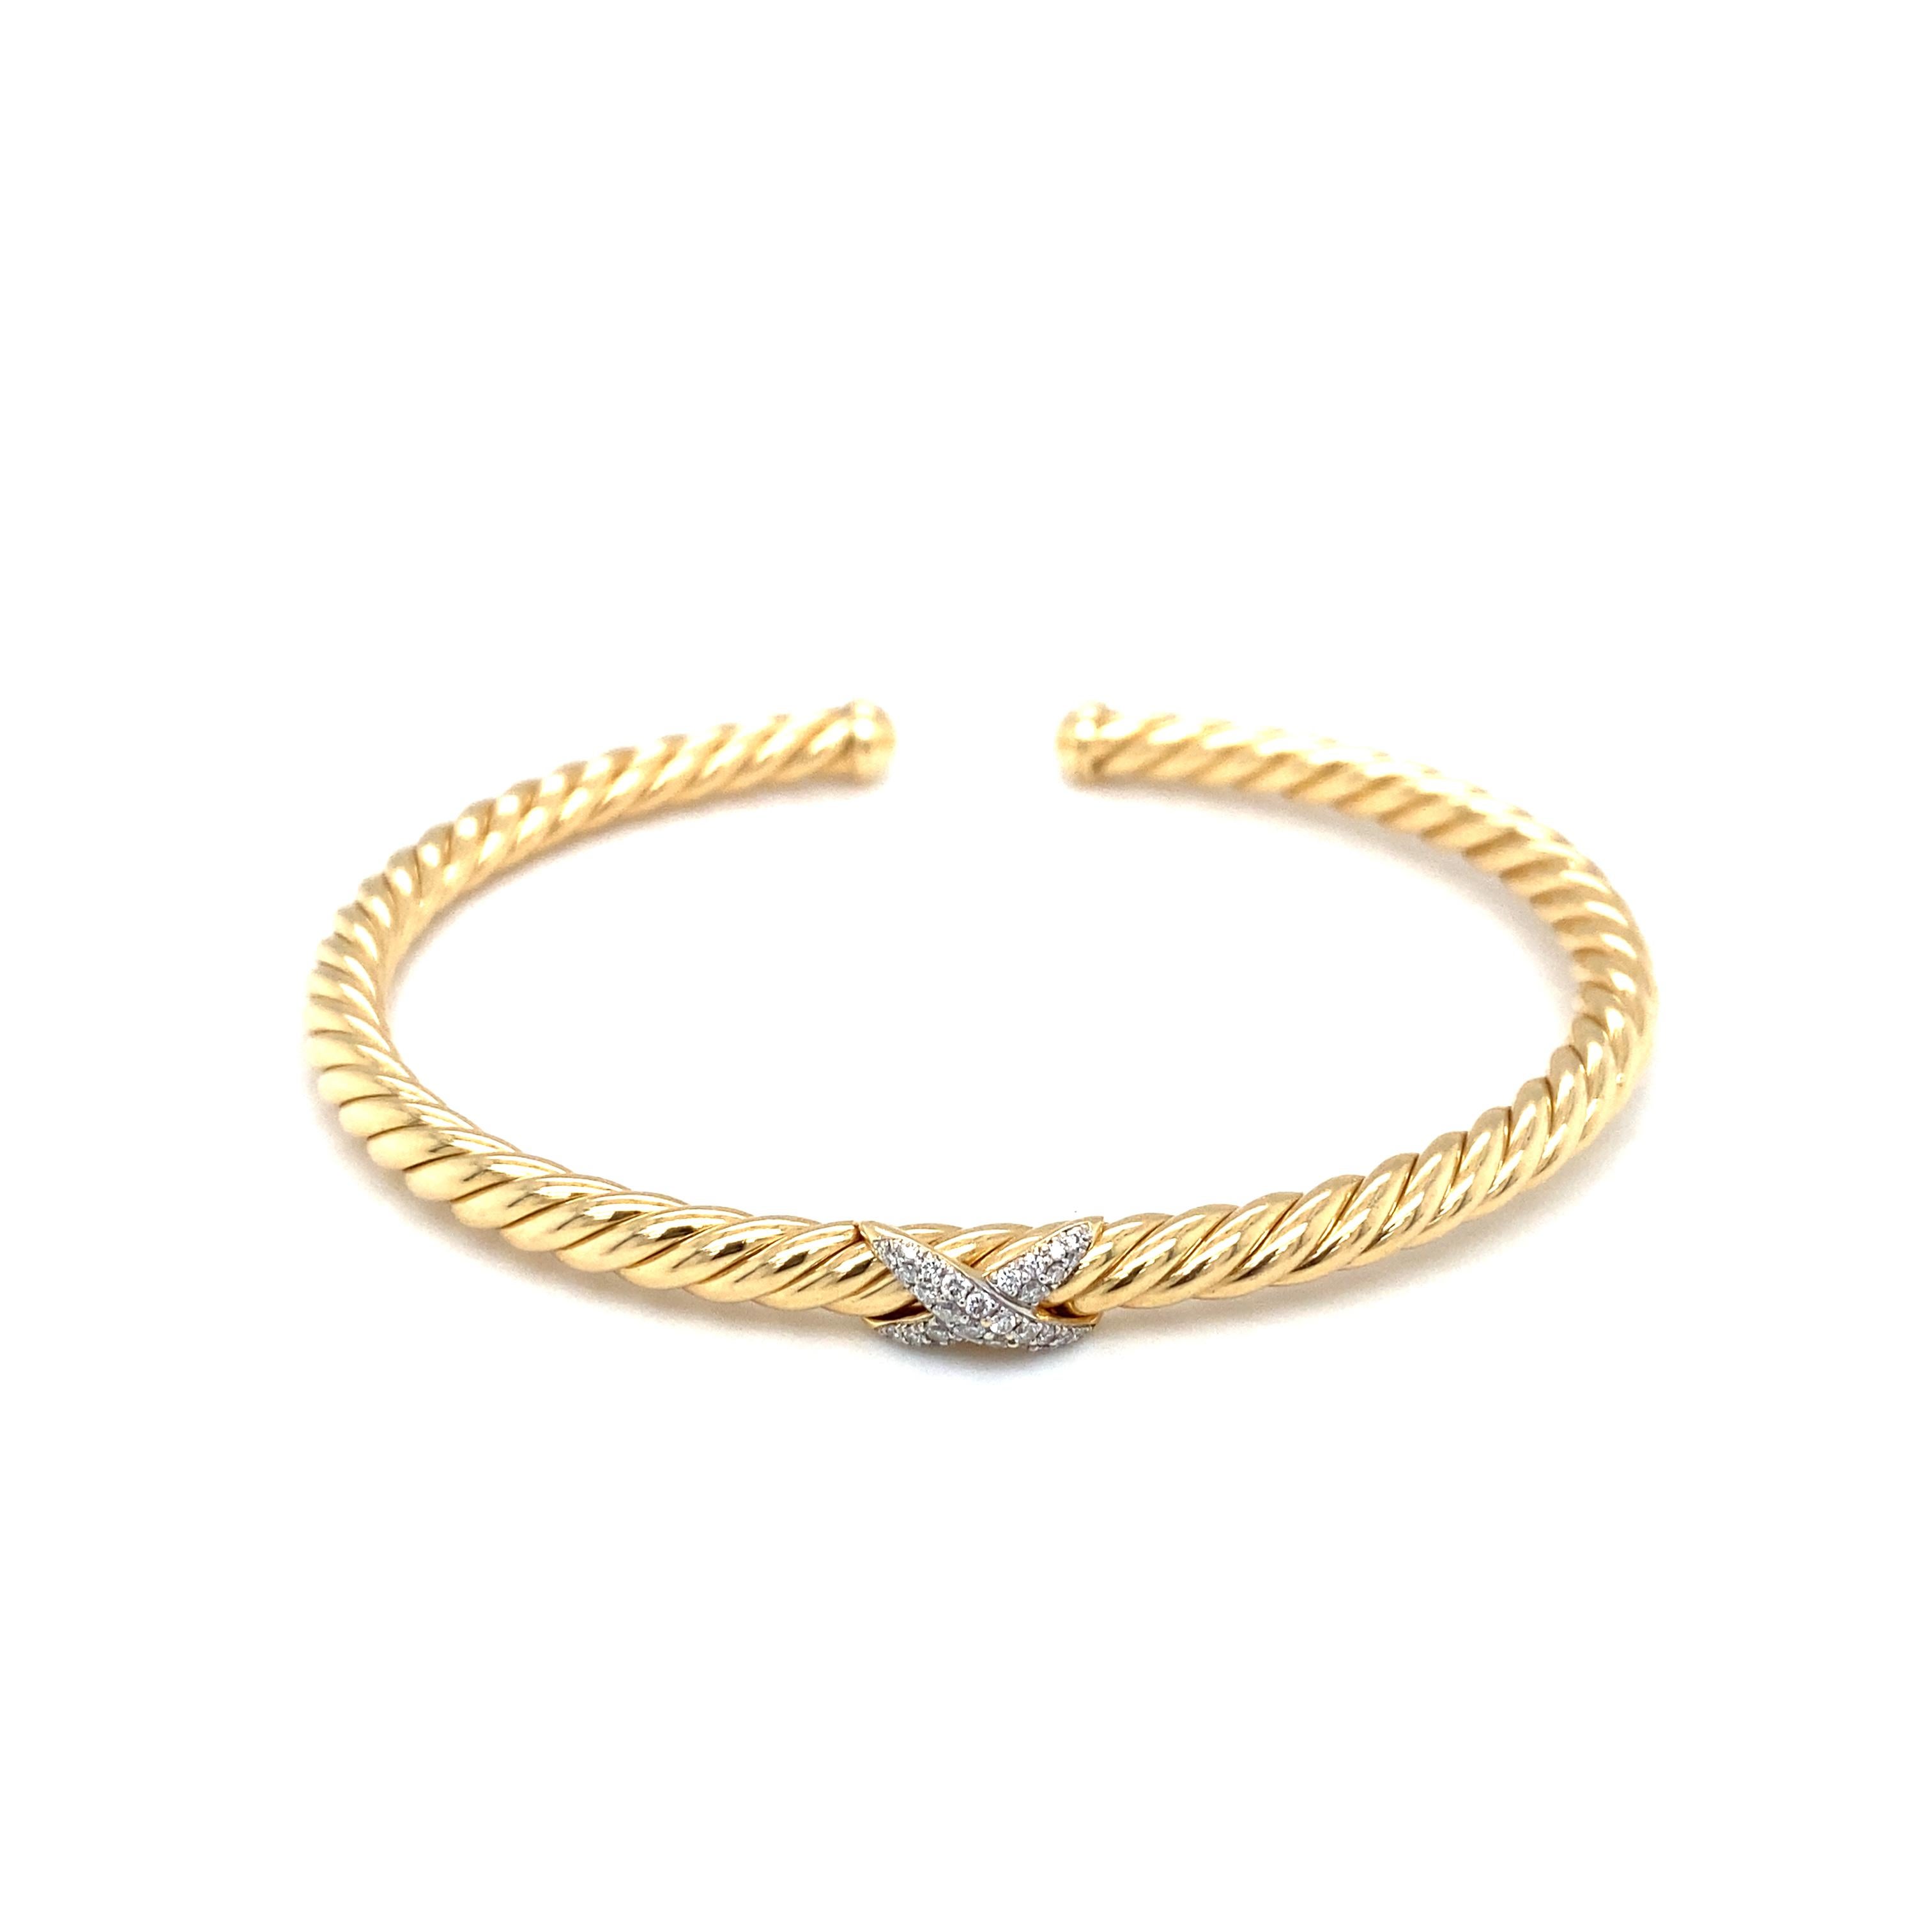 Round Cut David Yurman X Cablespira Diamond Cuff Bracelet in 18 Karat Yellow Gold